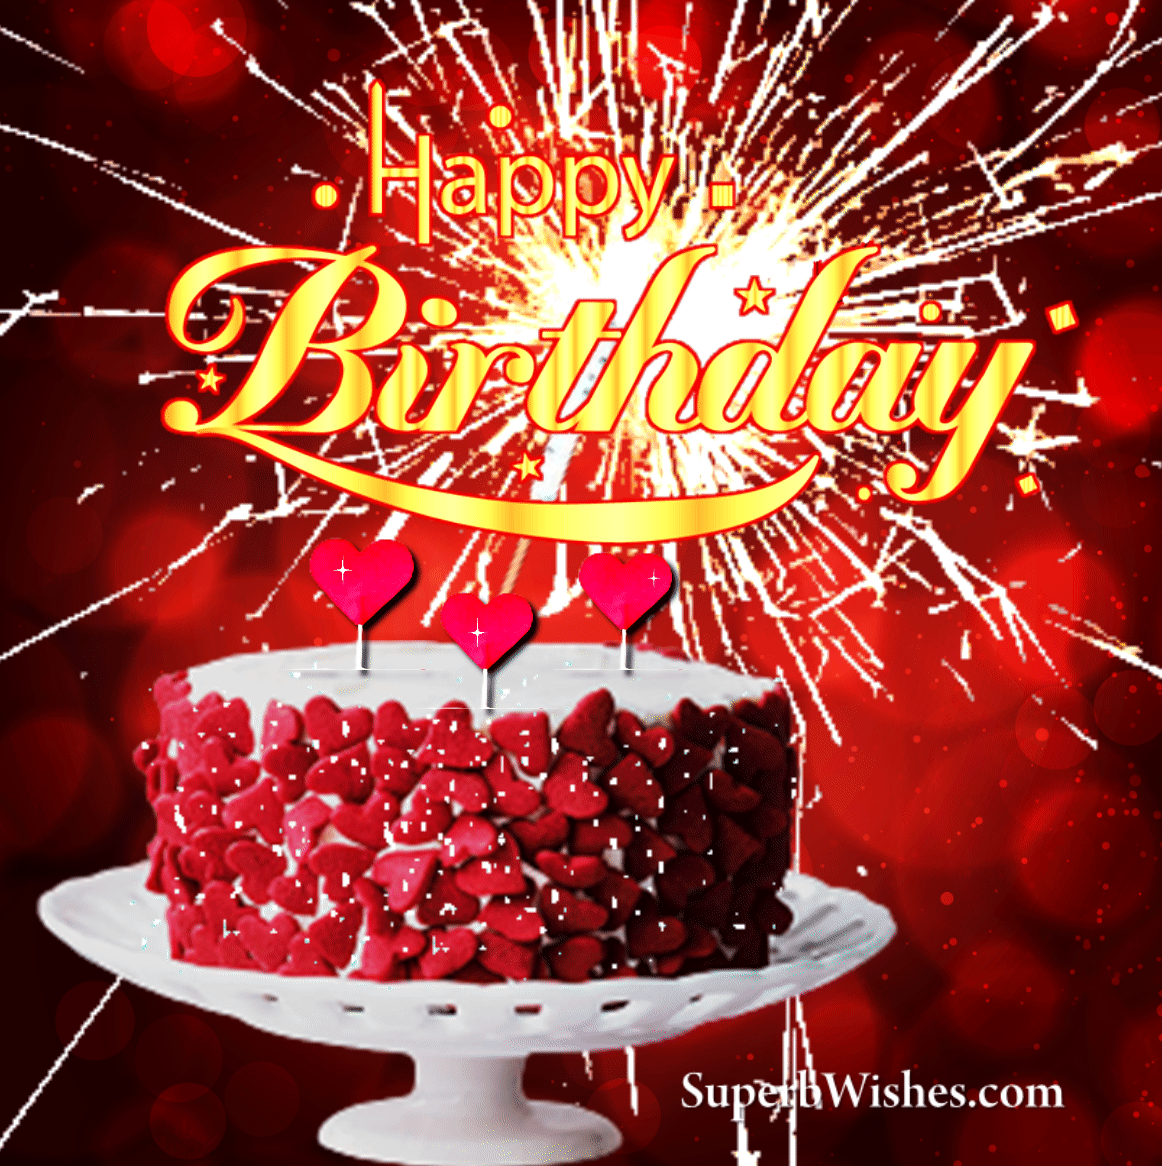 Reddish Happy Birthday Cake GIF With Lit Sparkler GIF | SuperbWishes